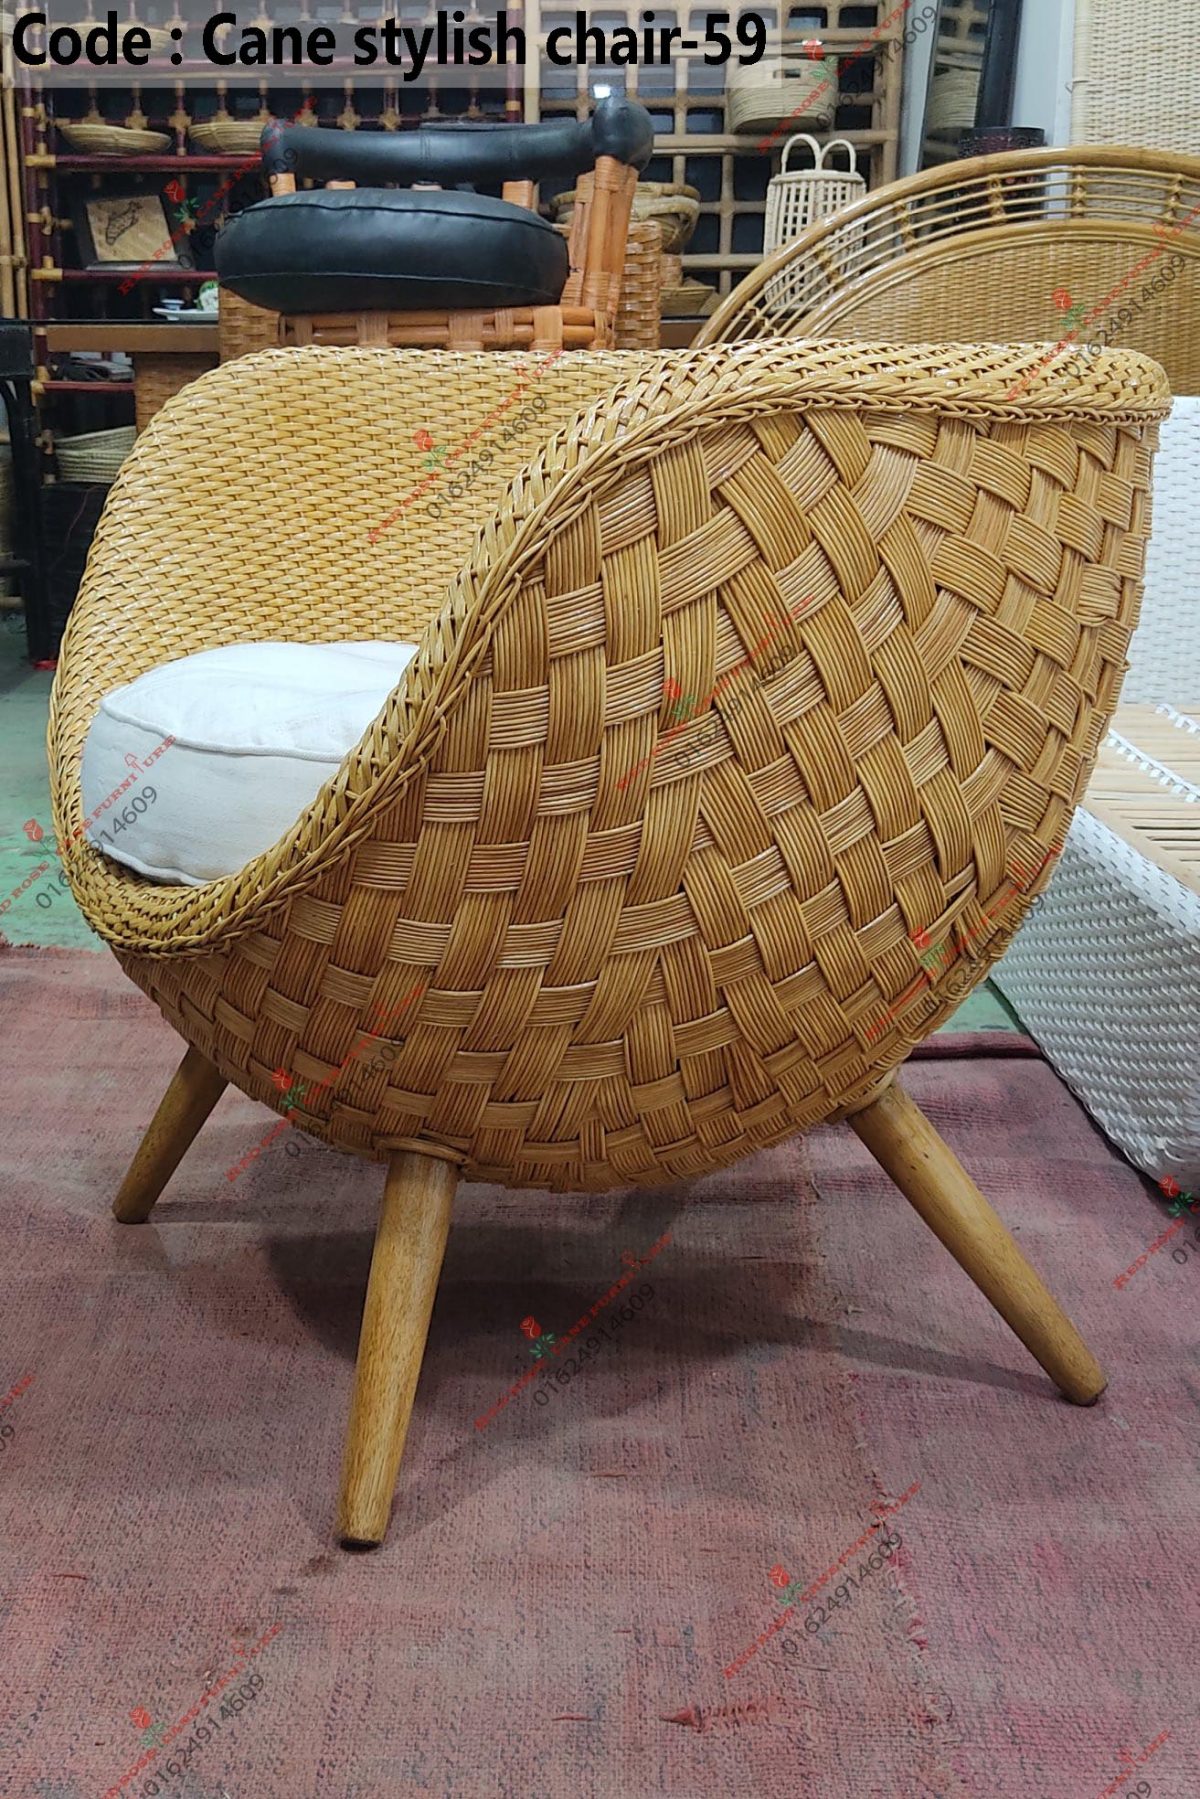 cane stylish chair